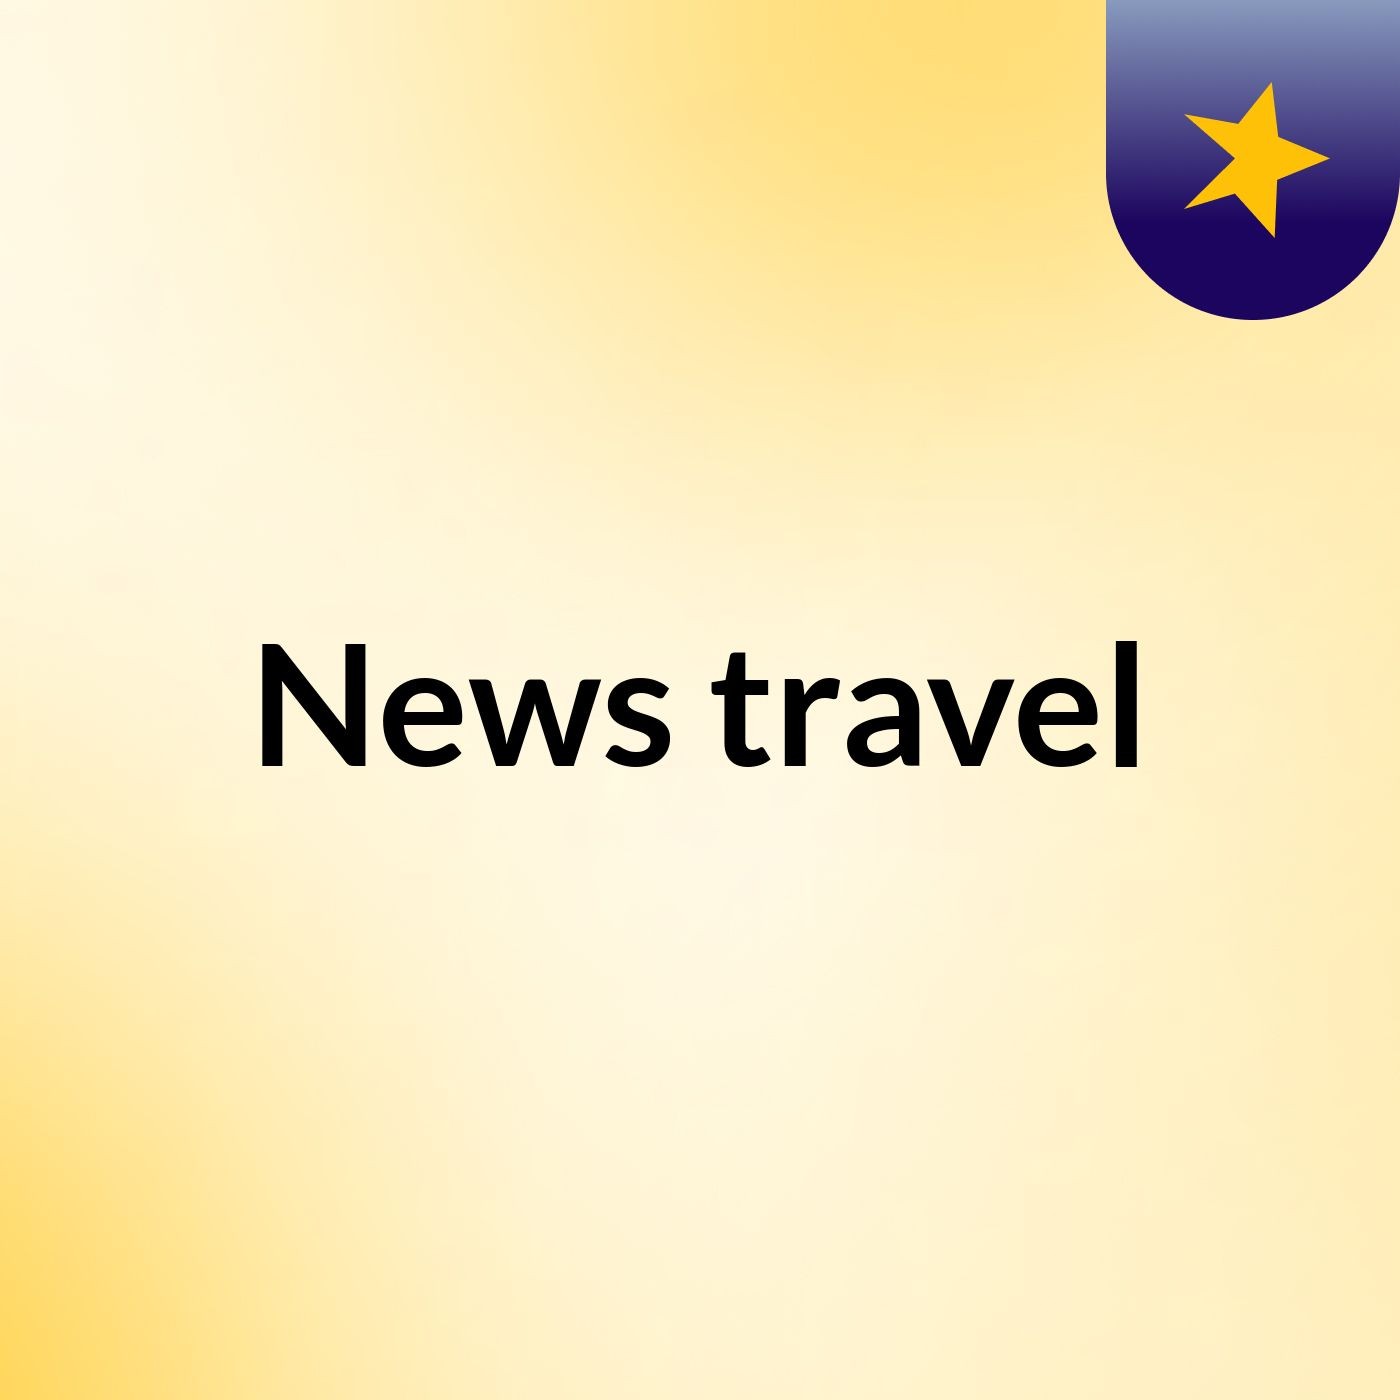 News travel